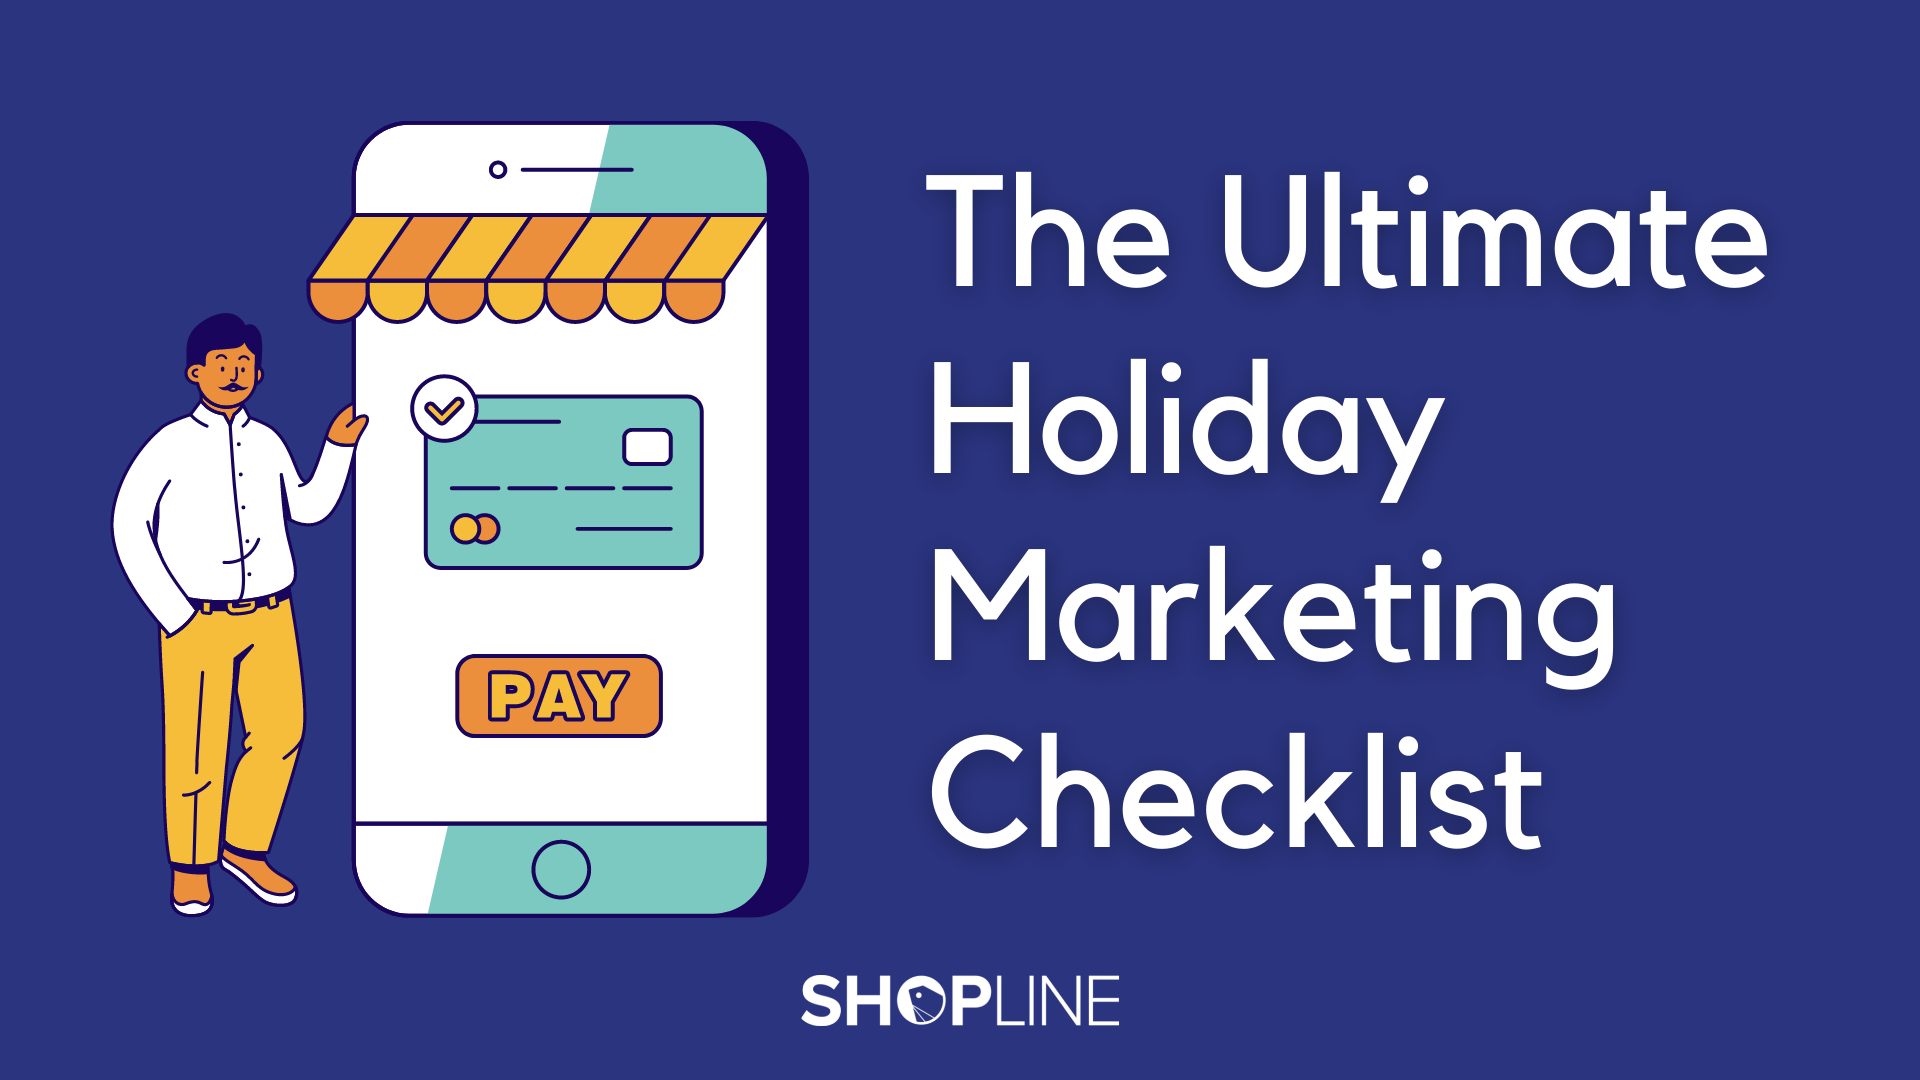 The ultimately holiday marketing checklist